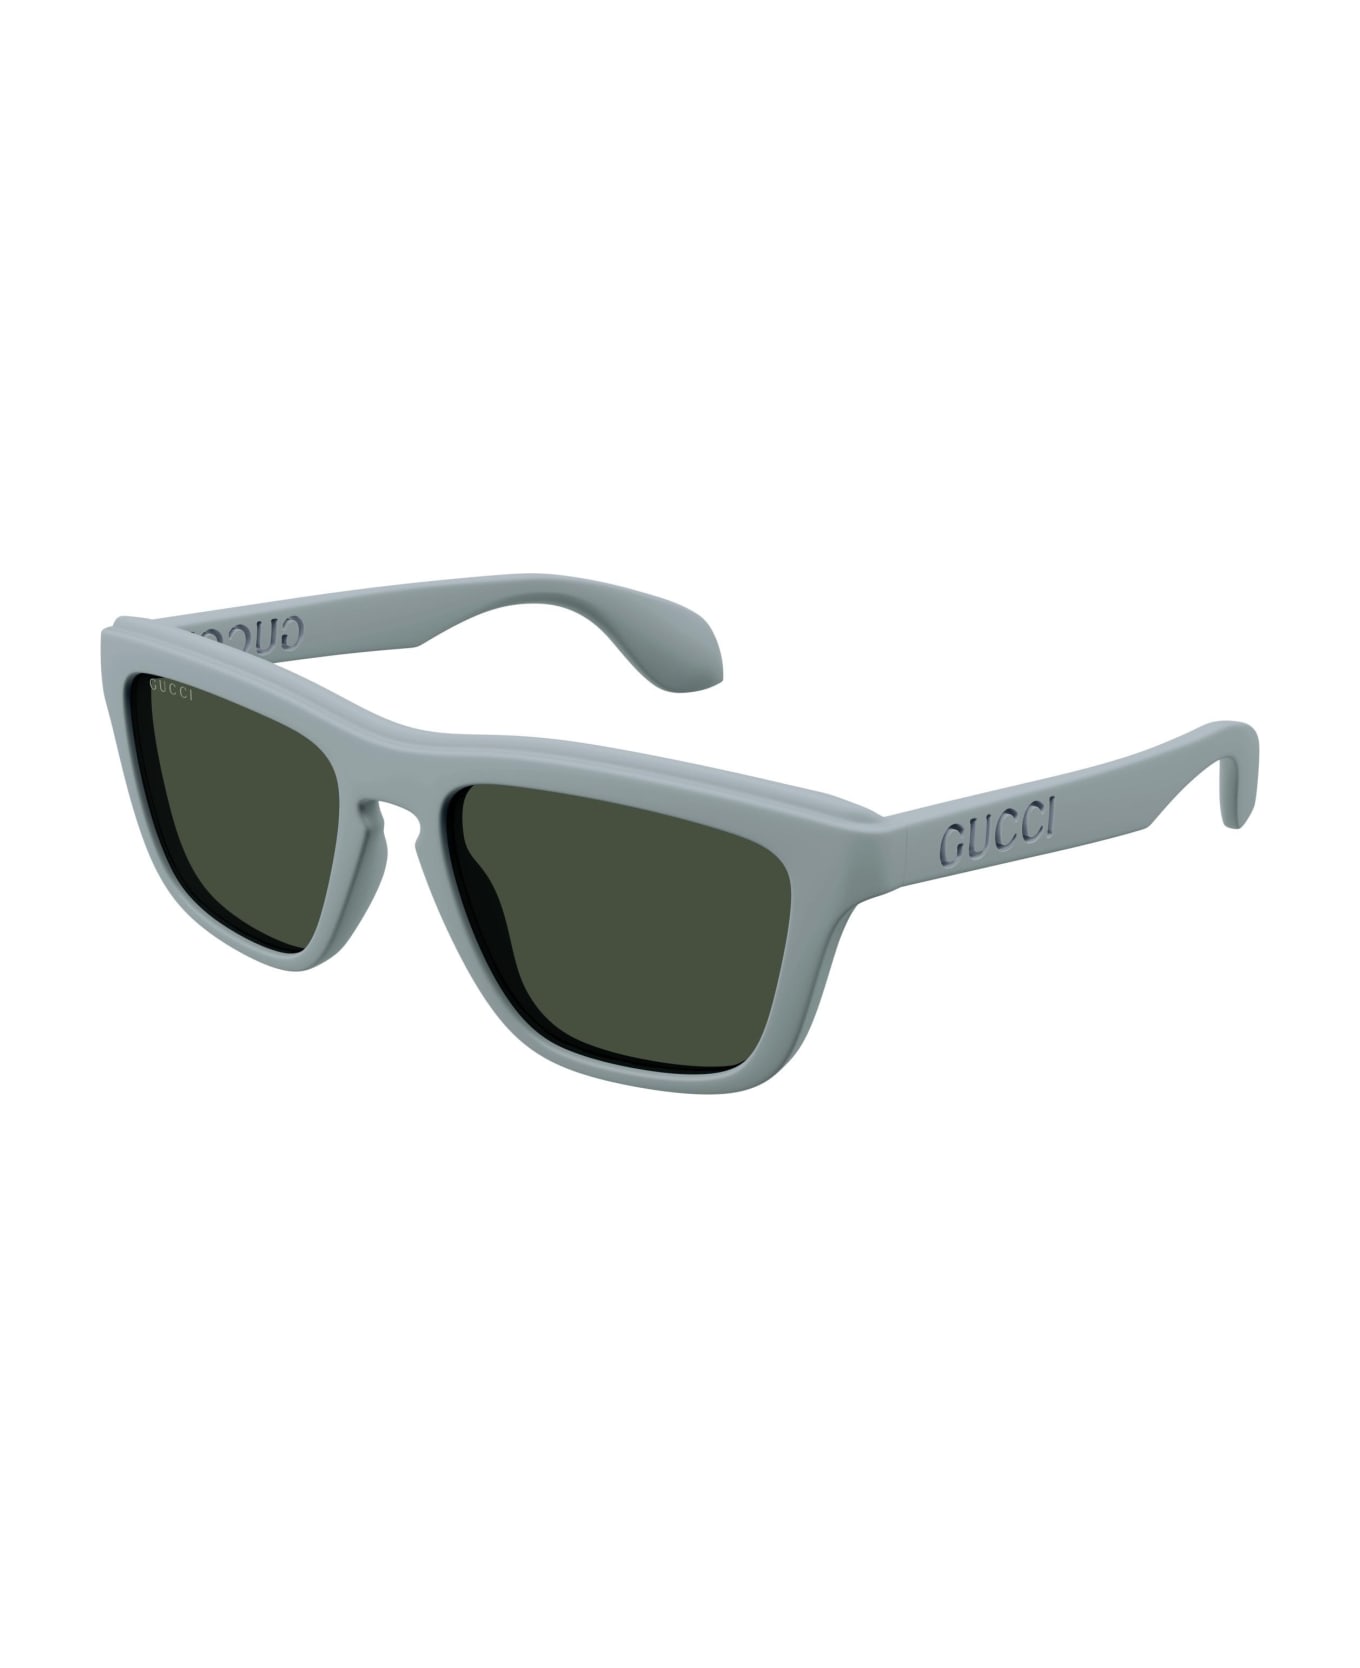 Gucci Eyewear Sunglasses - Azzurro/Blu chiaro サングラス